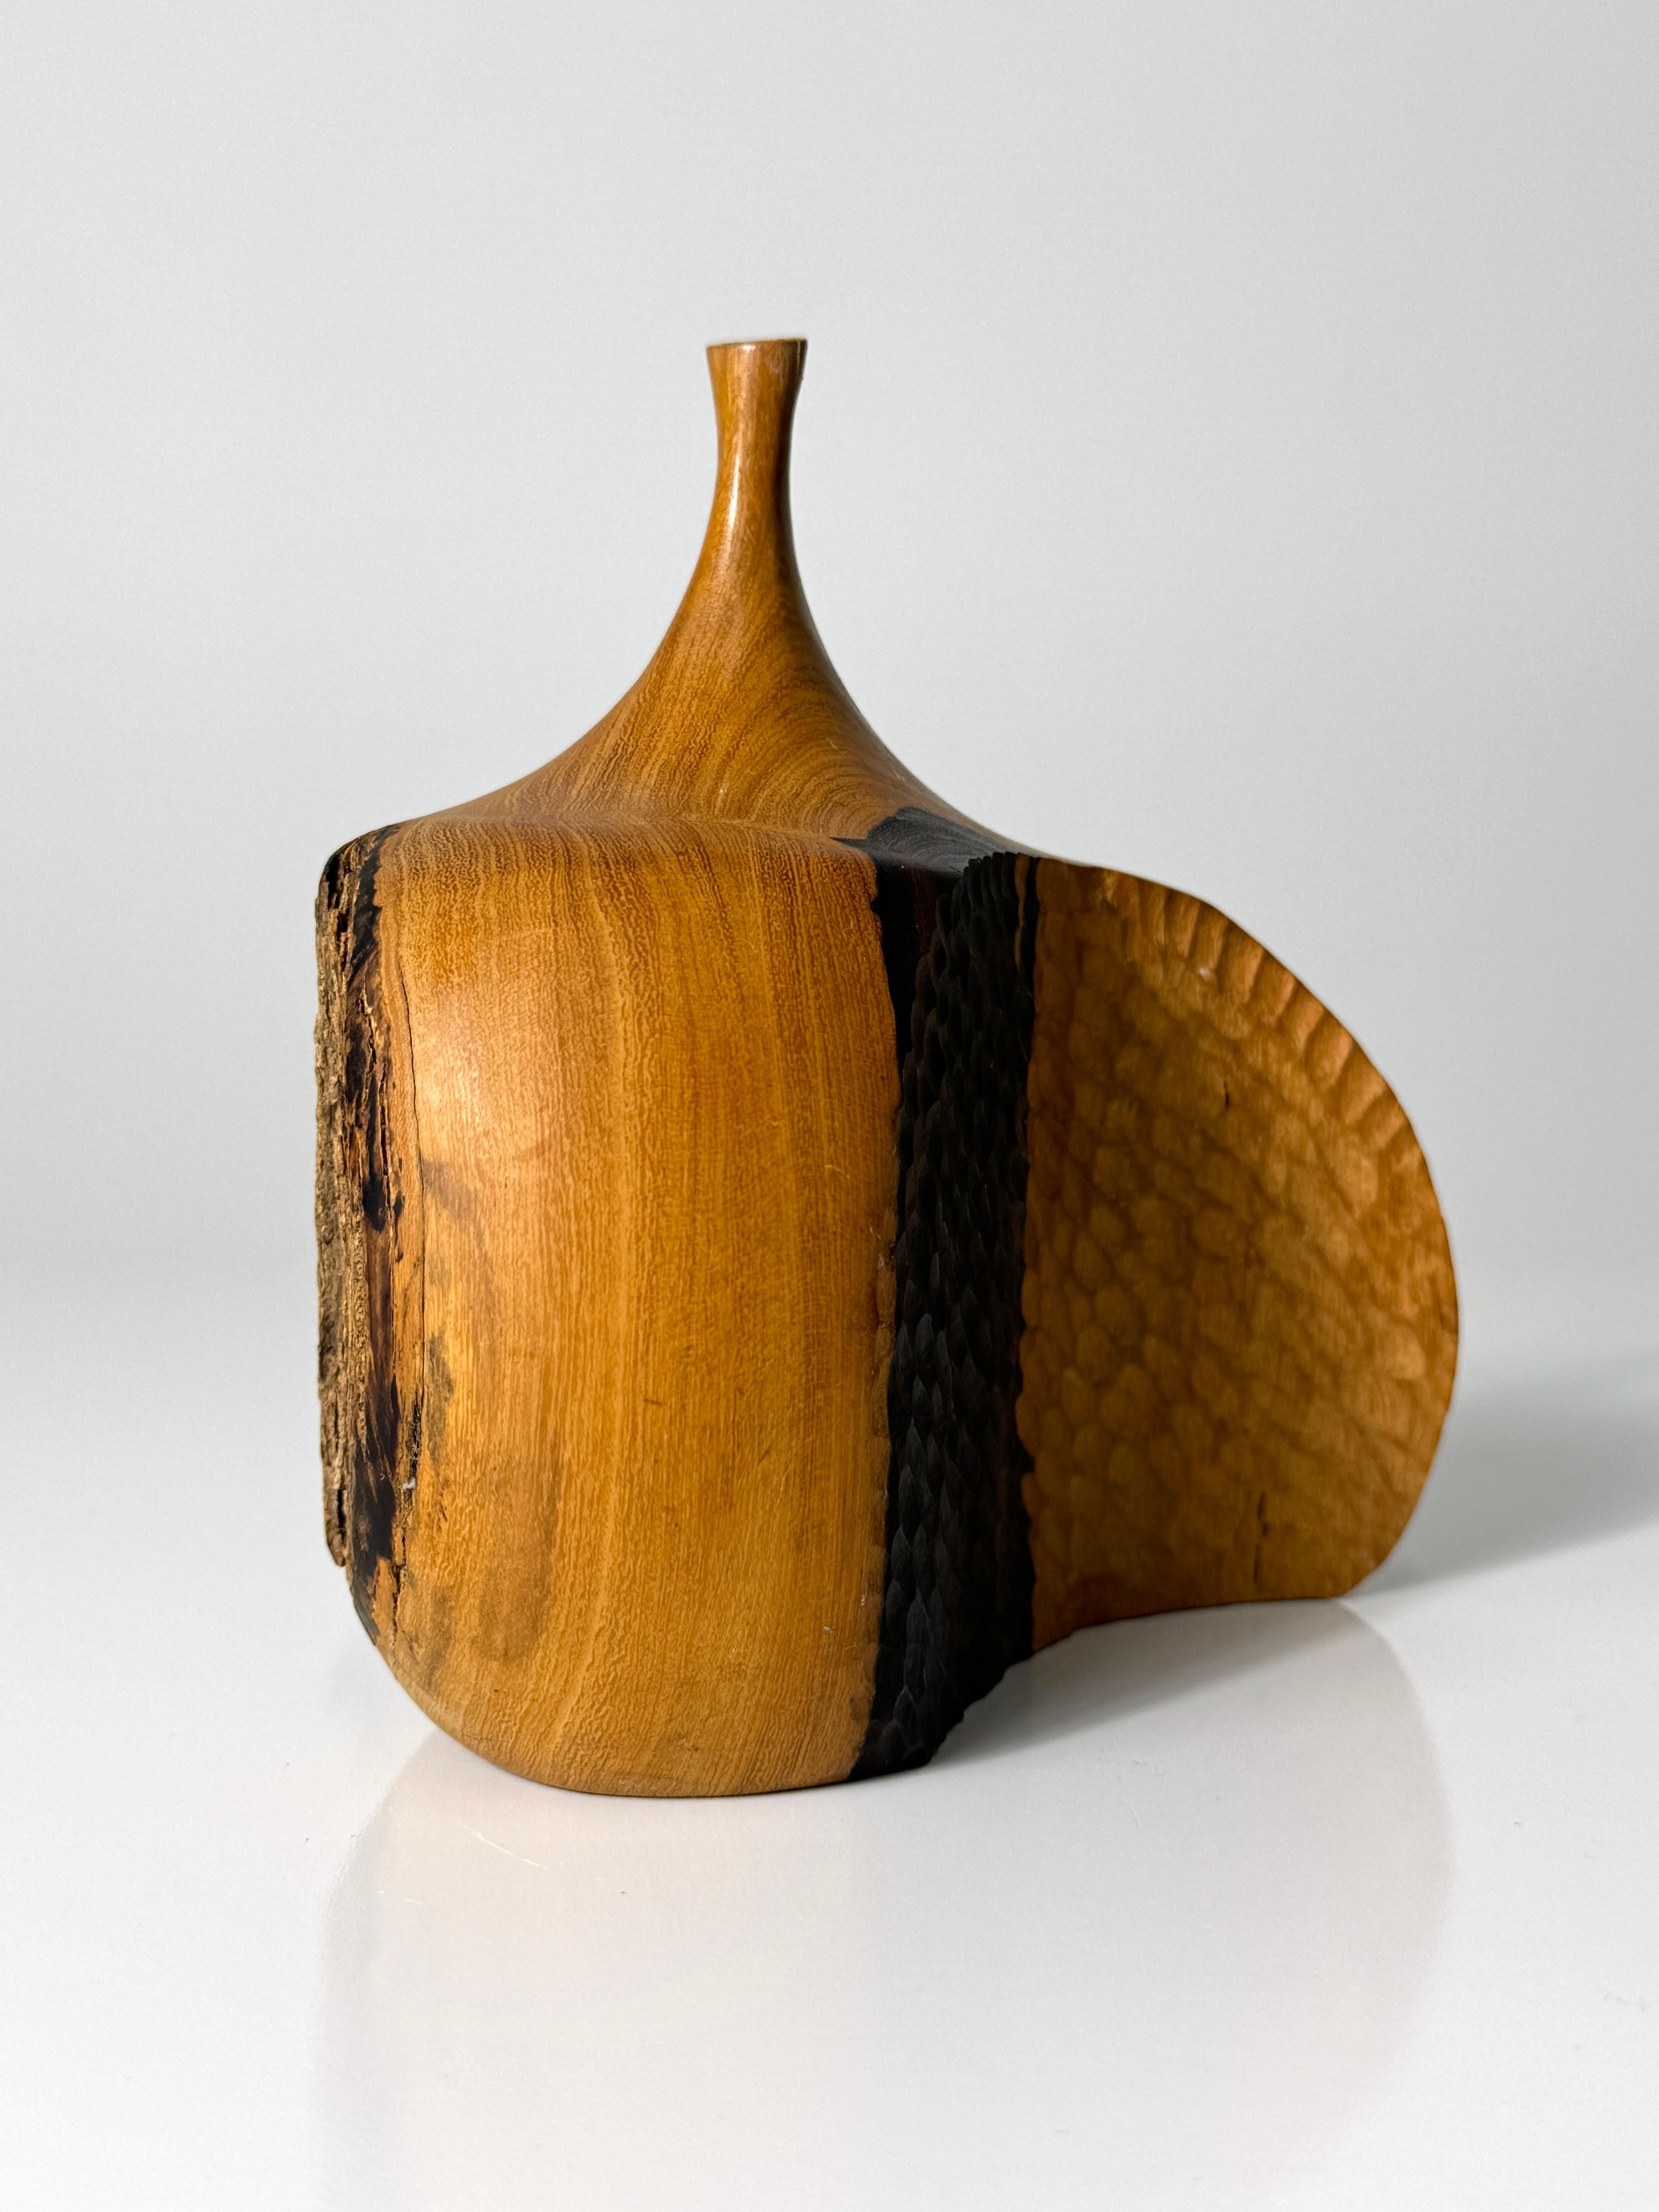 Wood Doug Ayers Carved Ironwood Live Edge Vase Weedpot Vessel Sculpture 1970s For Sale